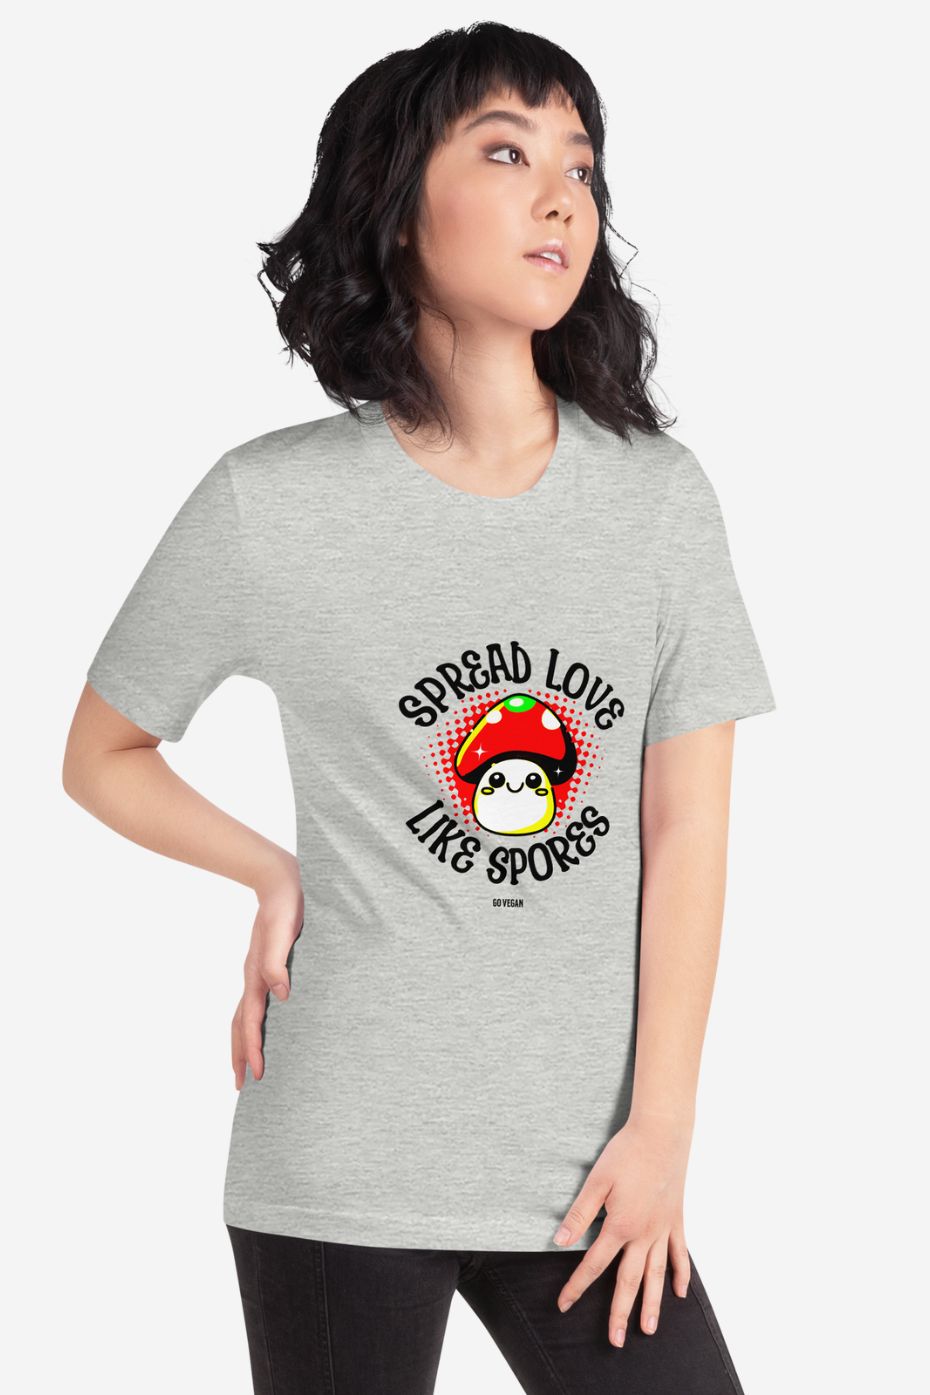 Spread Love Like Spores - Unisex t-shirt